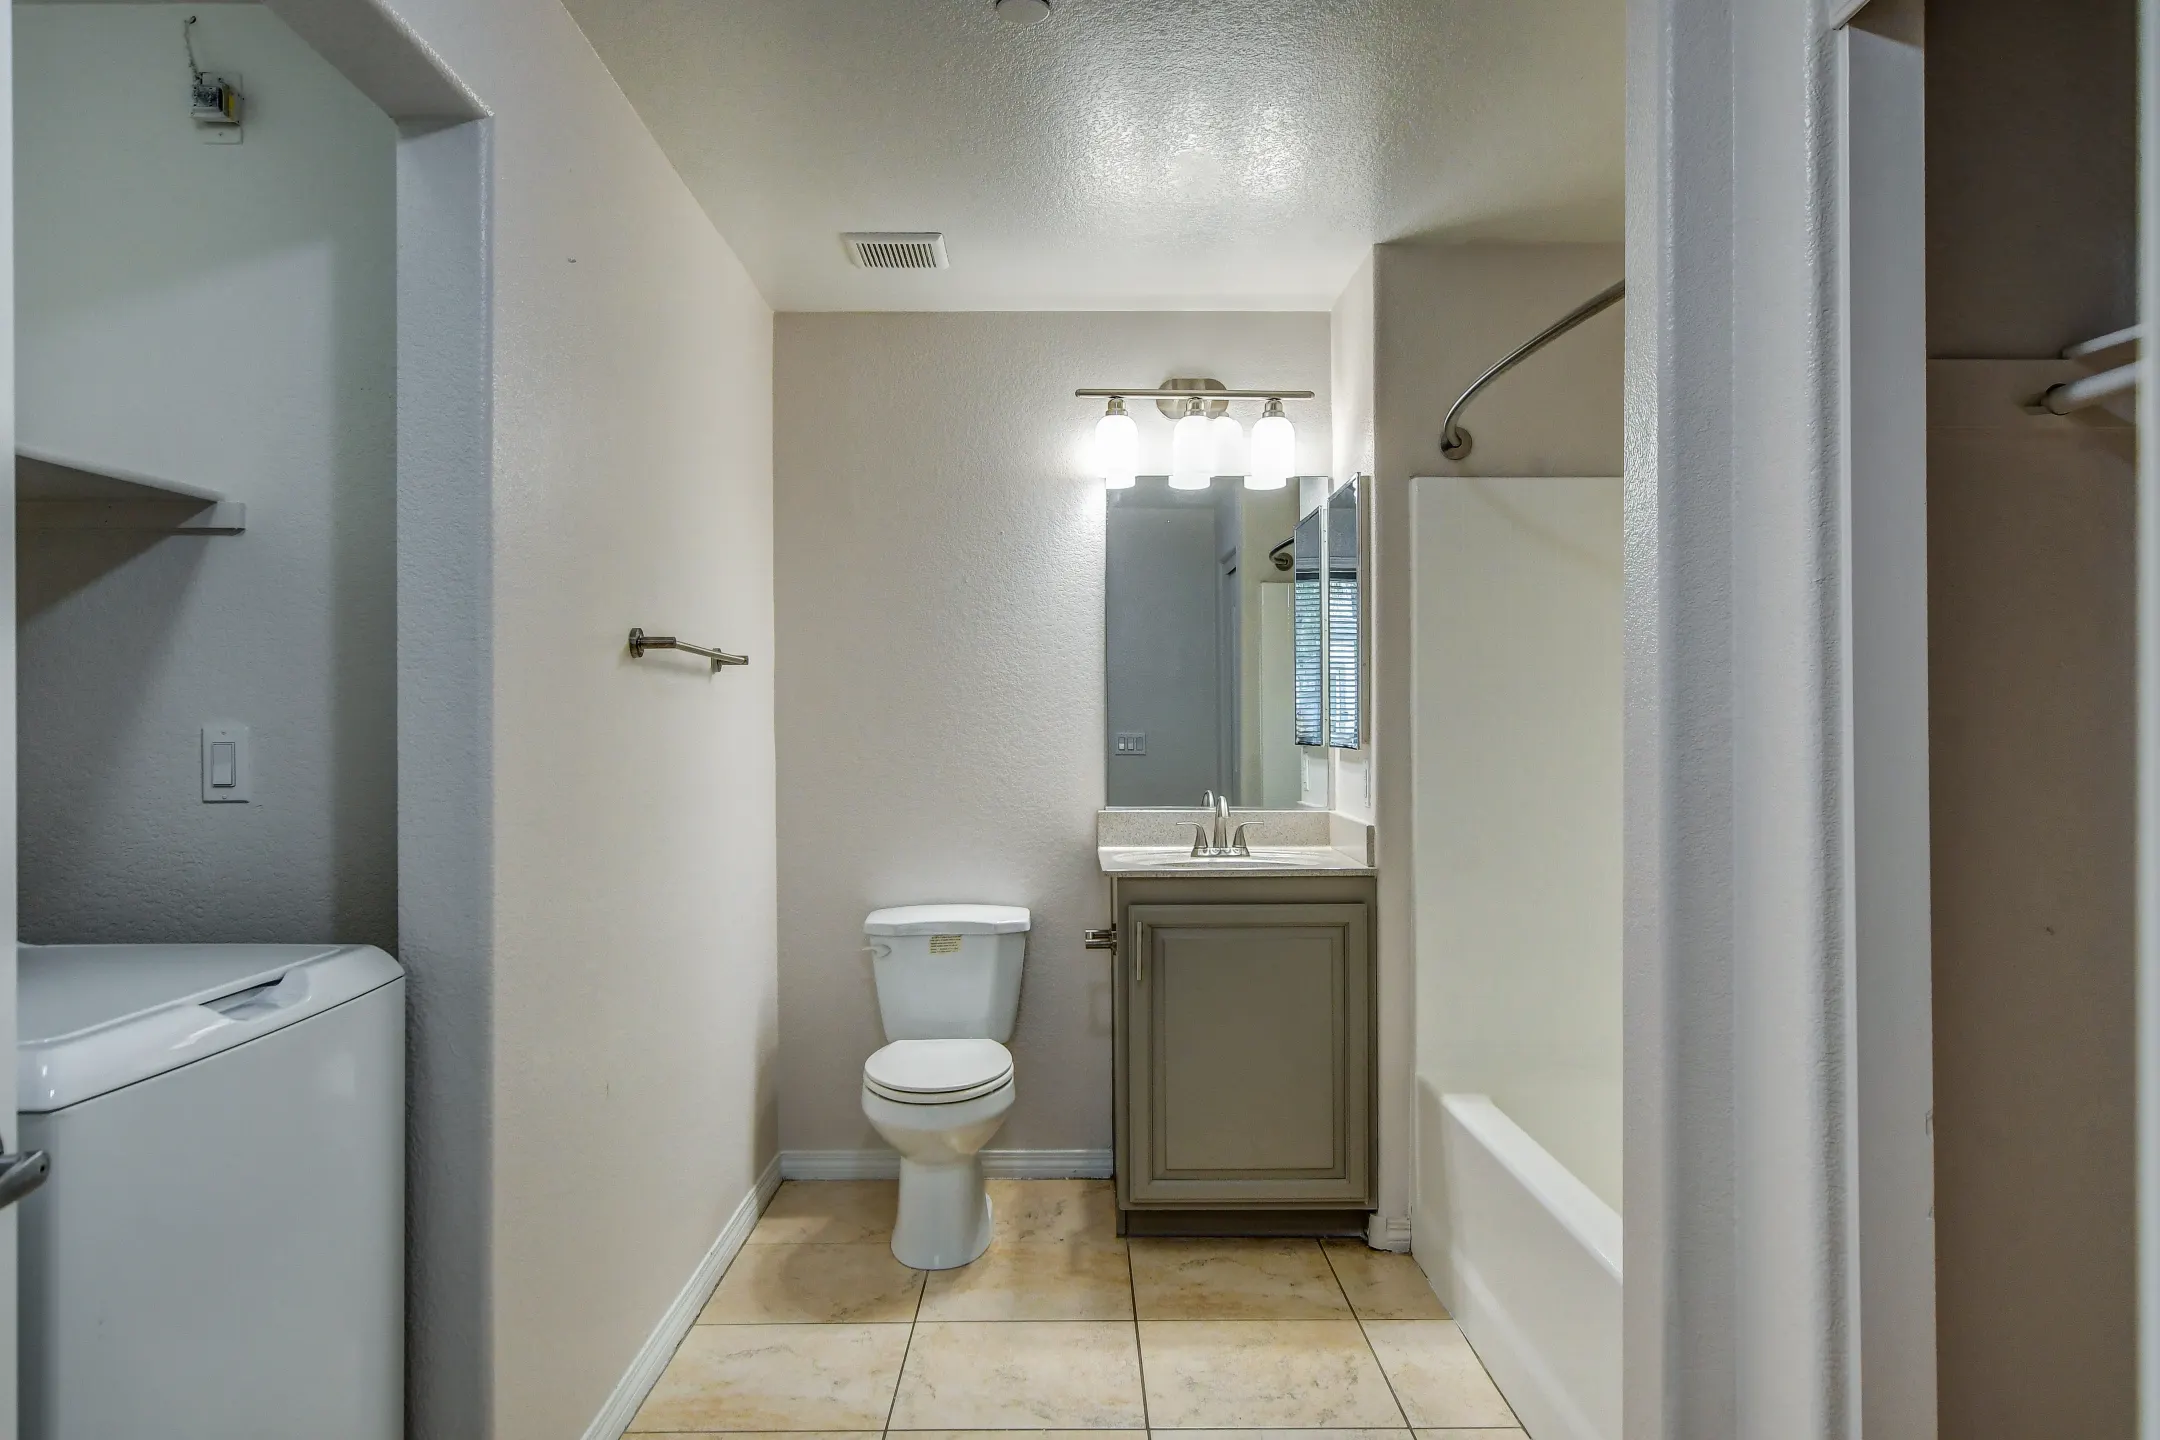 Bathroom - Fleetwood - Las Vegas, NV